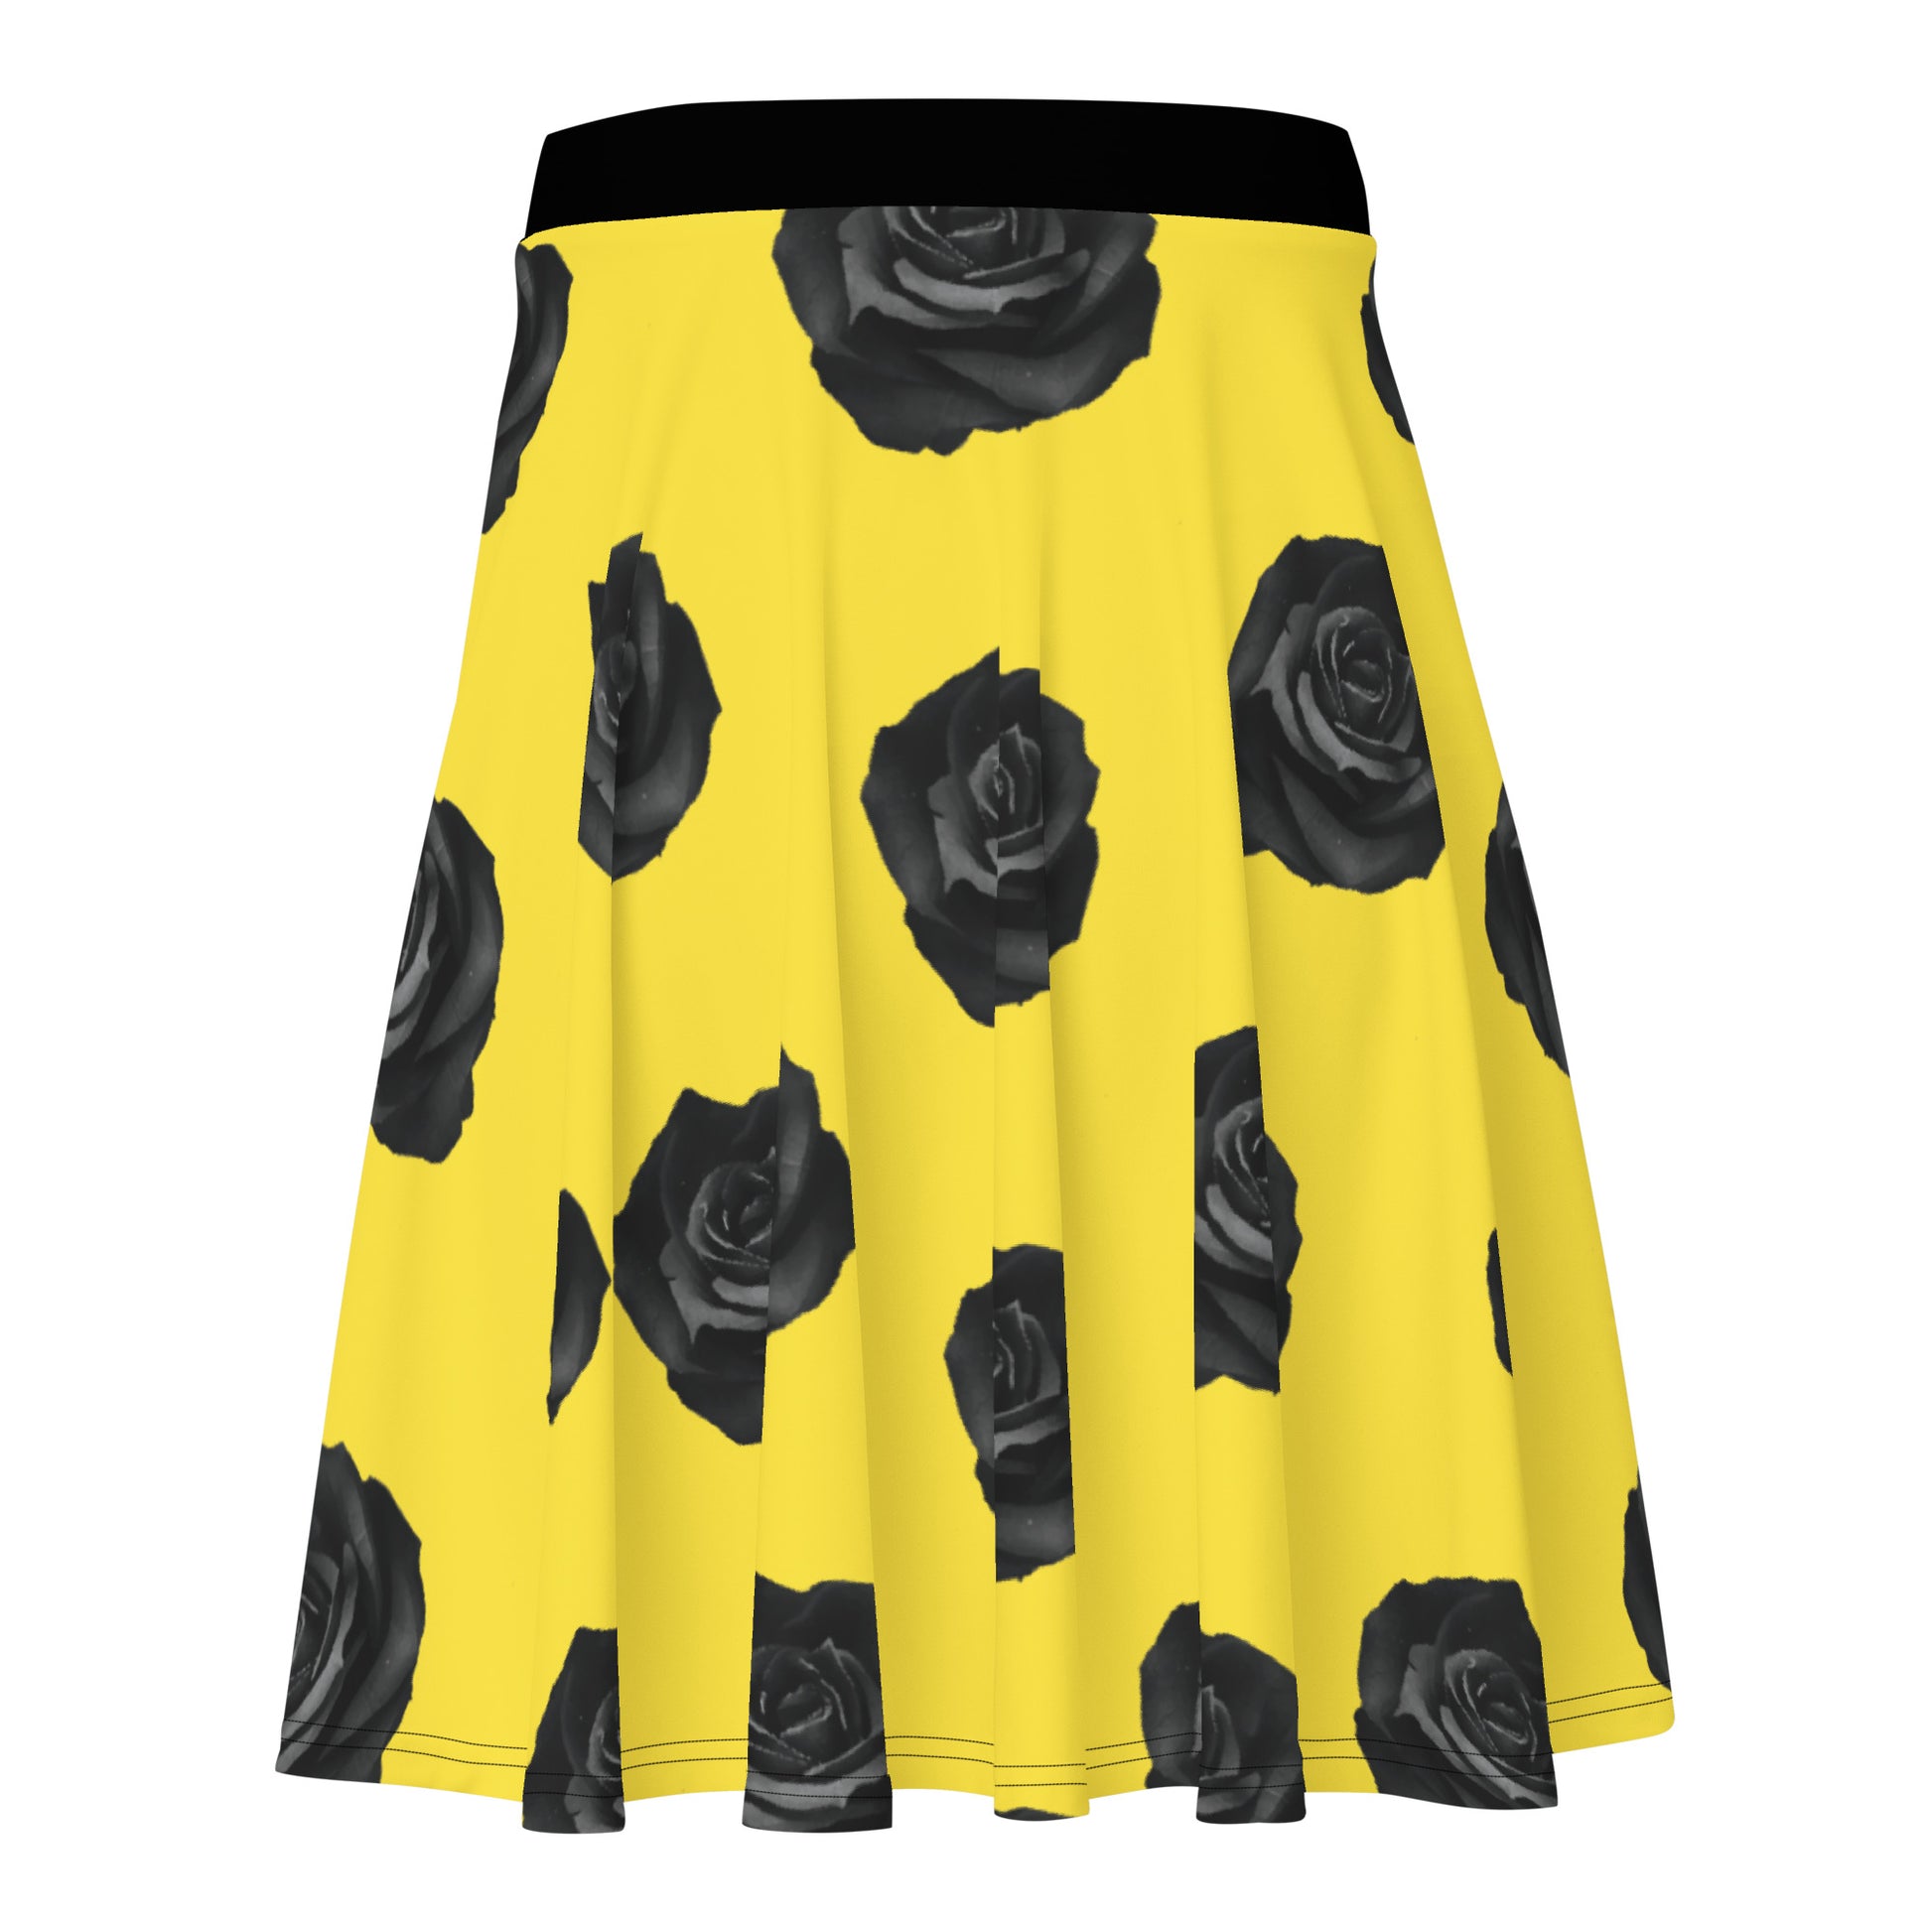 Black Rose Skirt Yellow